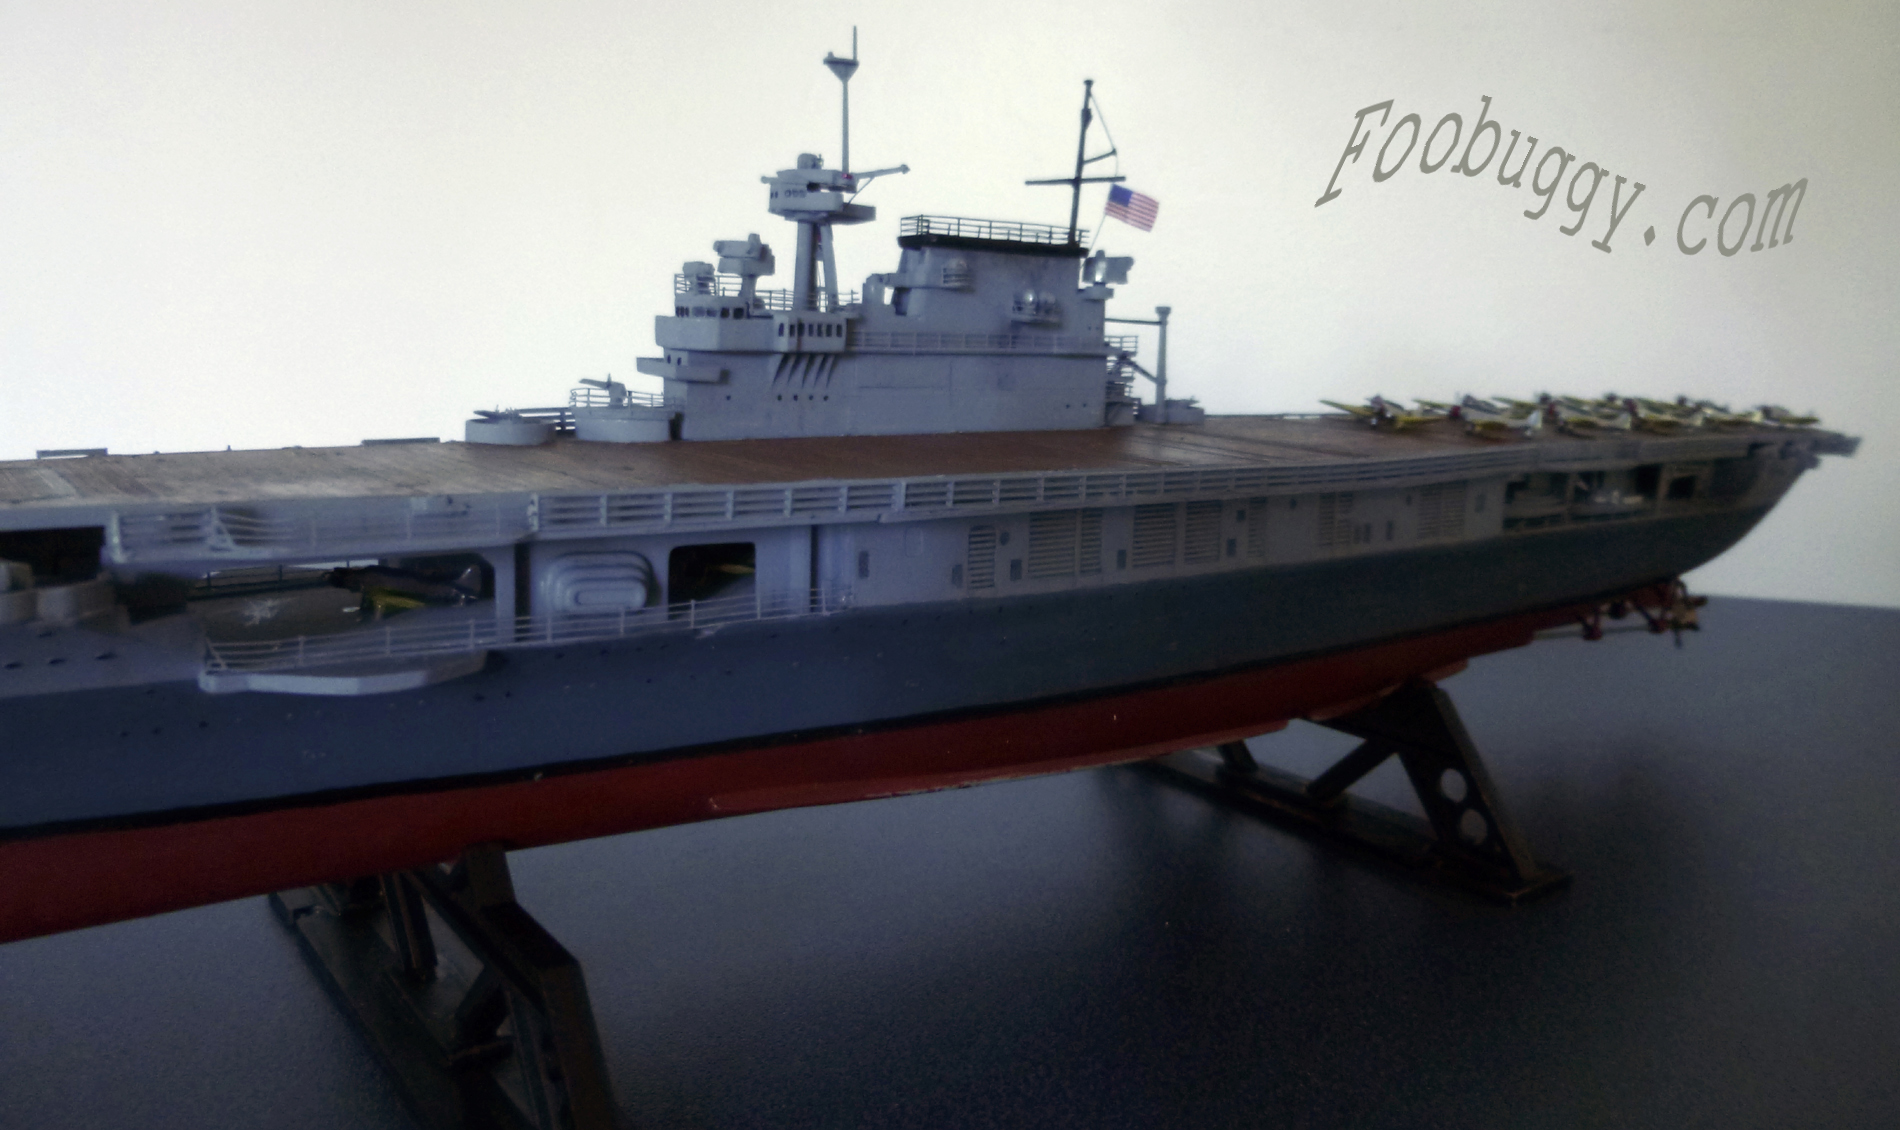 Revell USS Arizona – scaleModelGuy Home